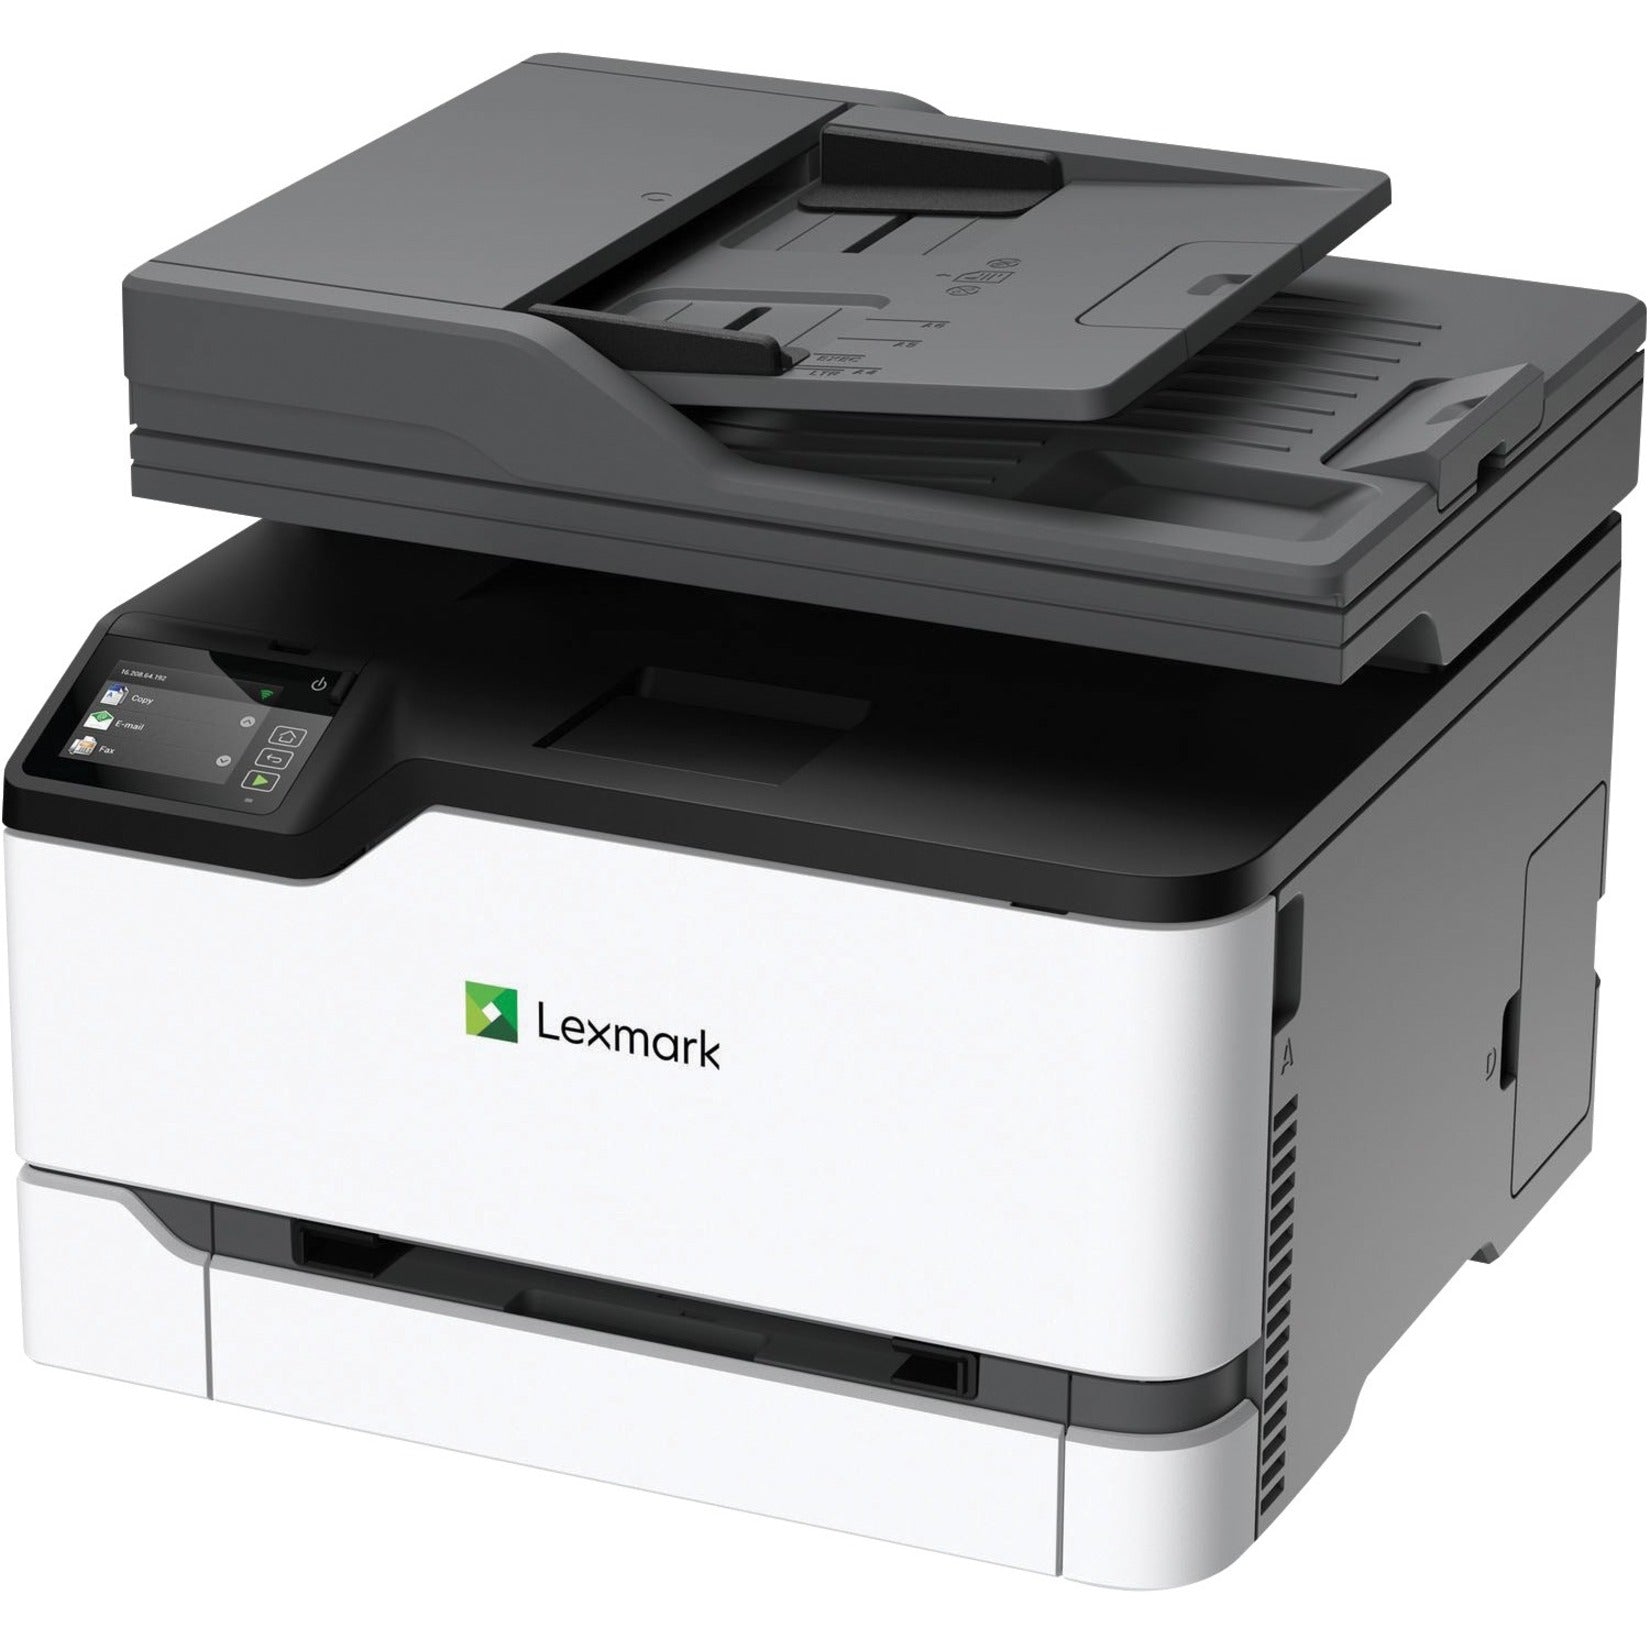 Lexmark 40N9650 MC3426i Color Laser Multifunction Printer, Wireless, Duplex Printing, 26 ppm, 600 x 600 dpi